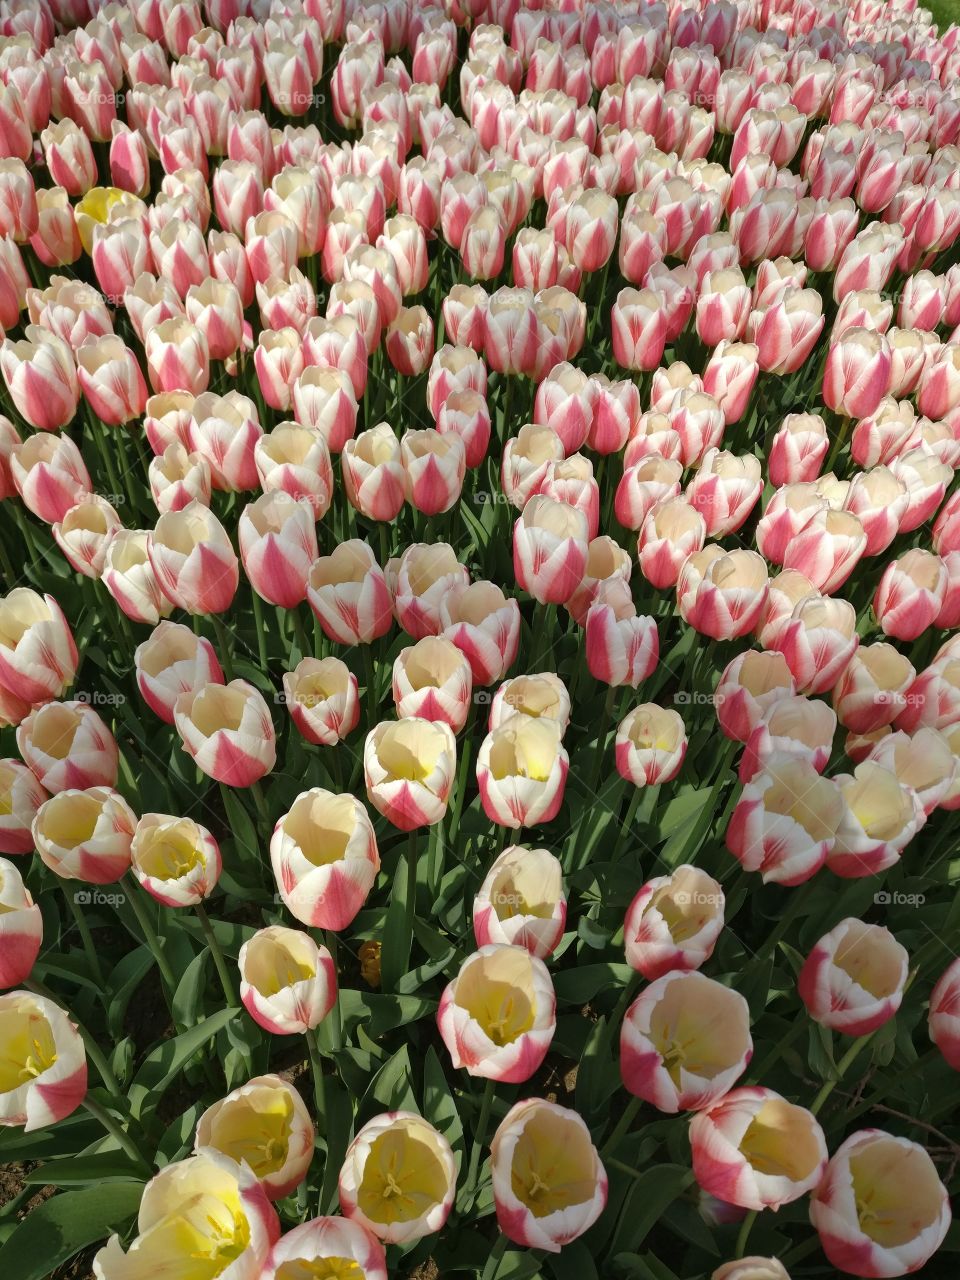 Tulips festival in Istanbul